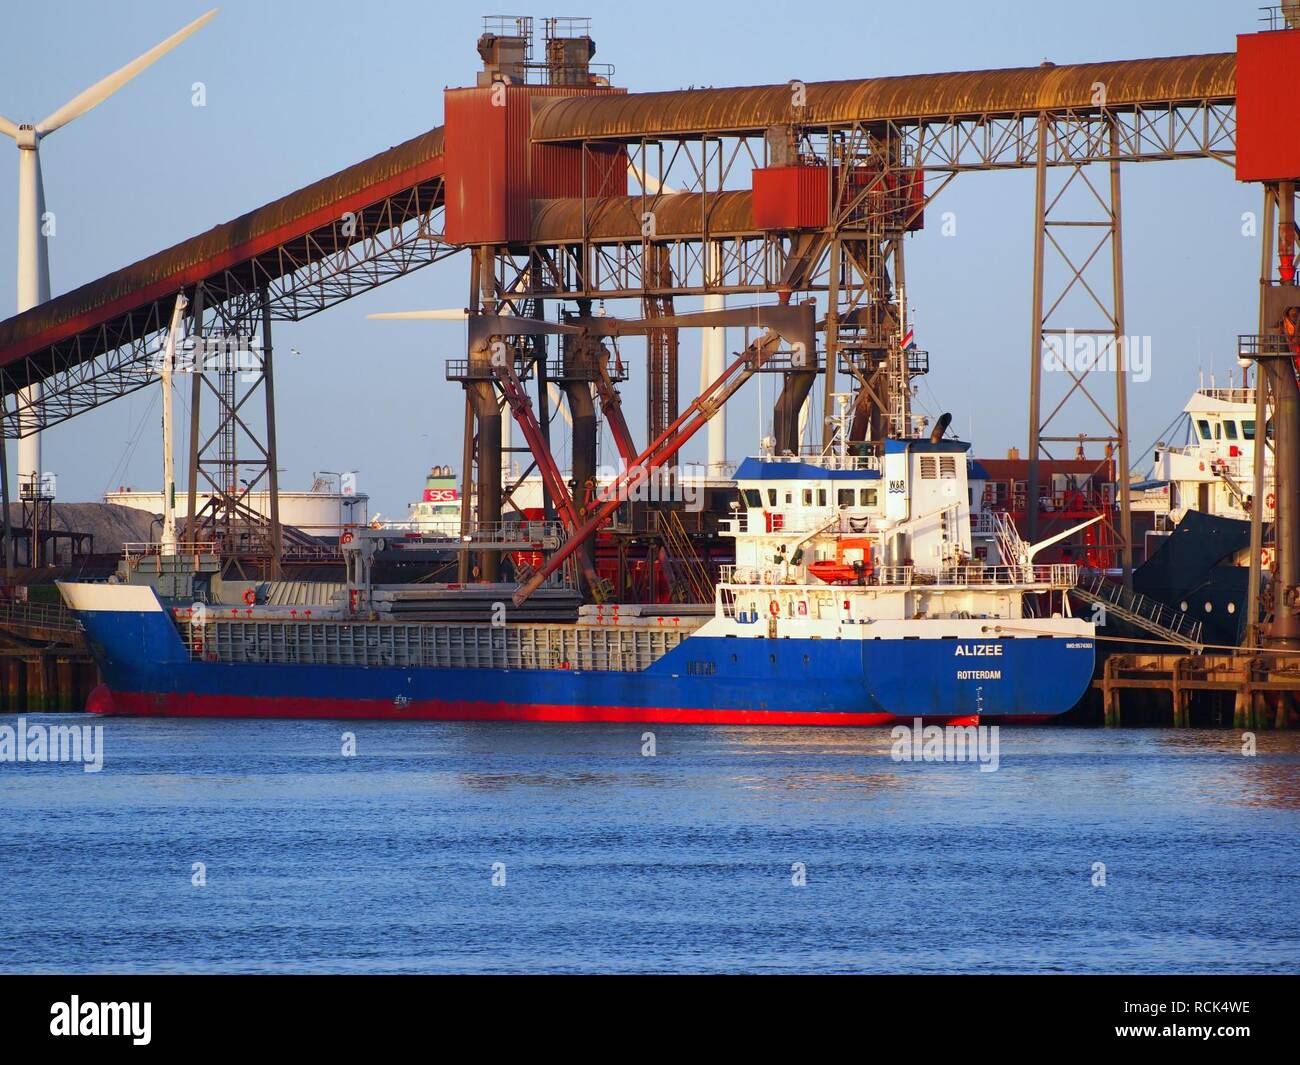 Alizee - IMO 9574303, Calandkanaal, Port of Rotterdam. Stock Photo